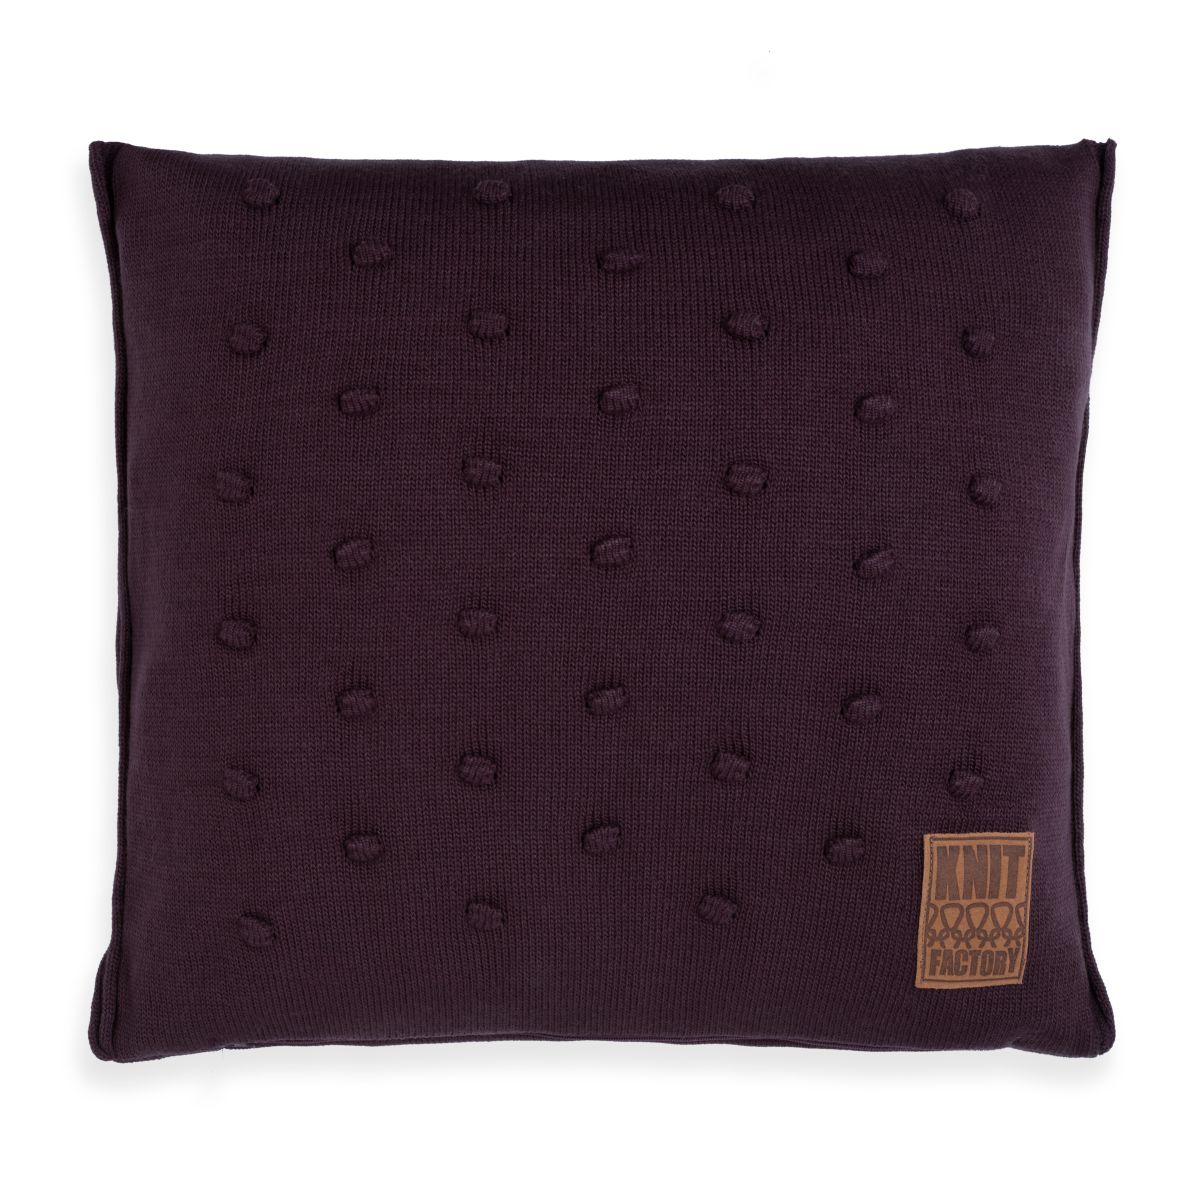 noa cushion aubergine 50x50